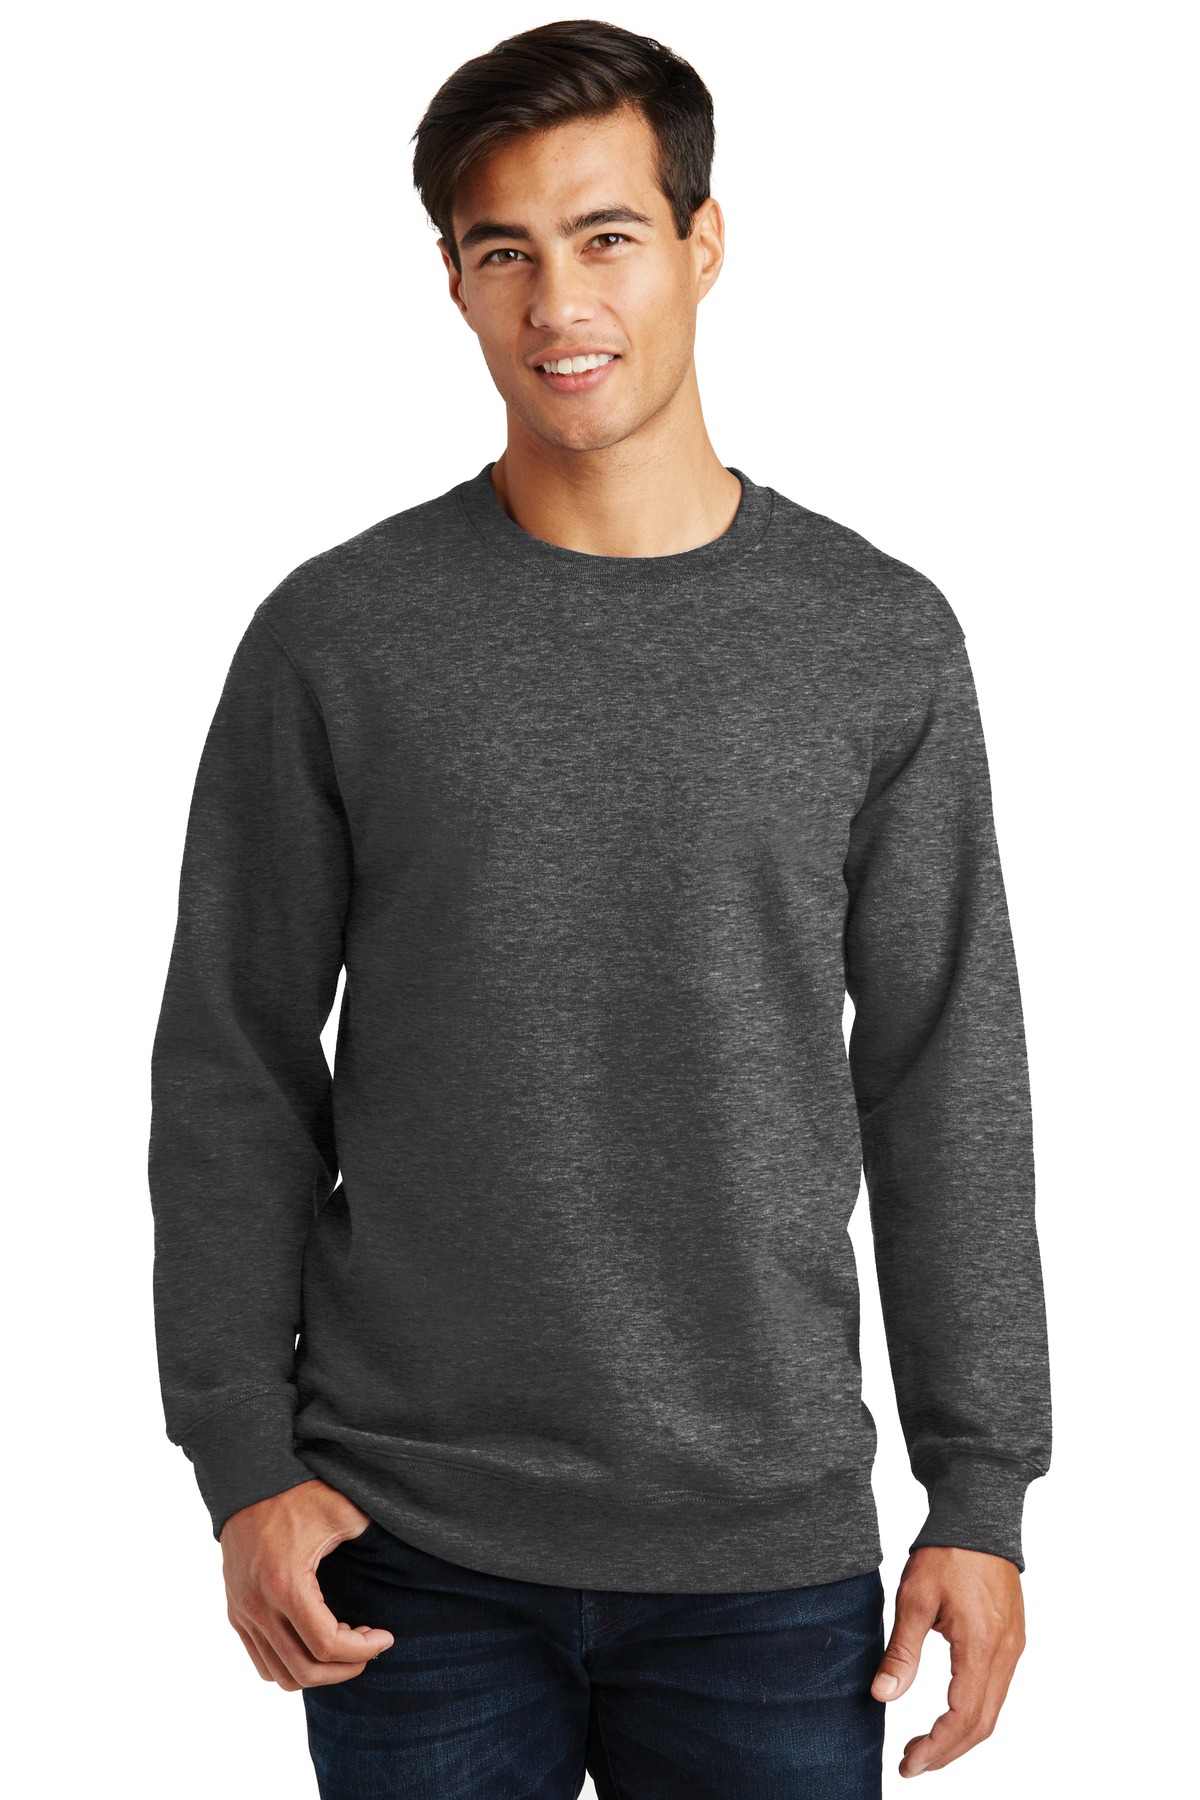 Unisex Fan Fleece Favorite Jiffy Crewneck Sweatshirt & Shirts Pc850 | Port Company